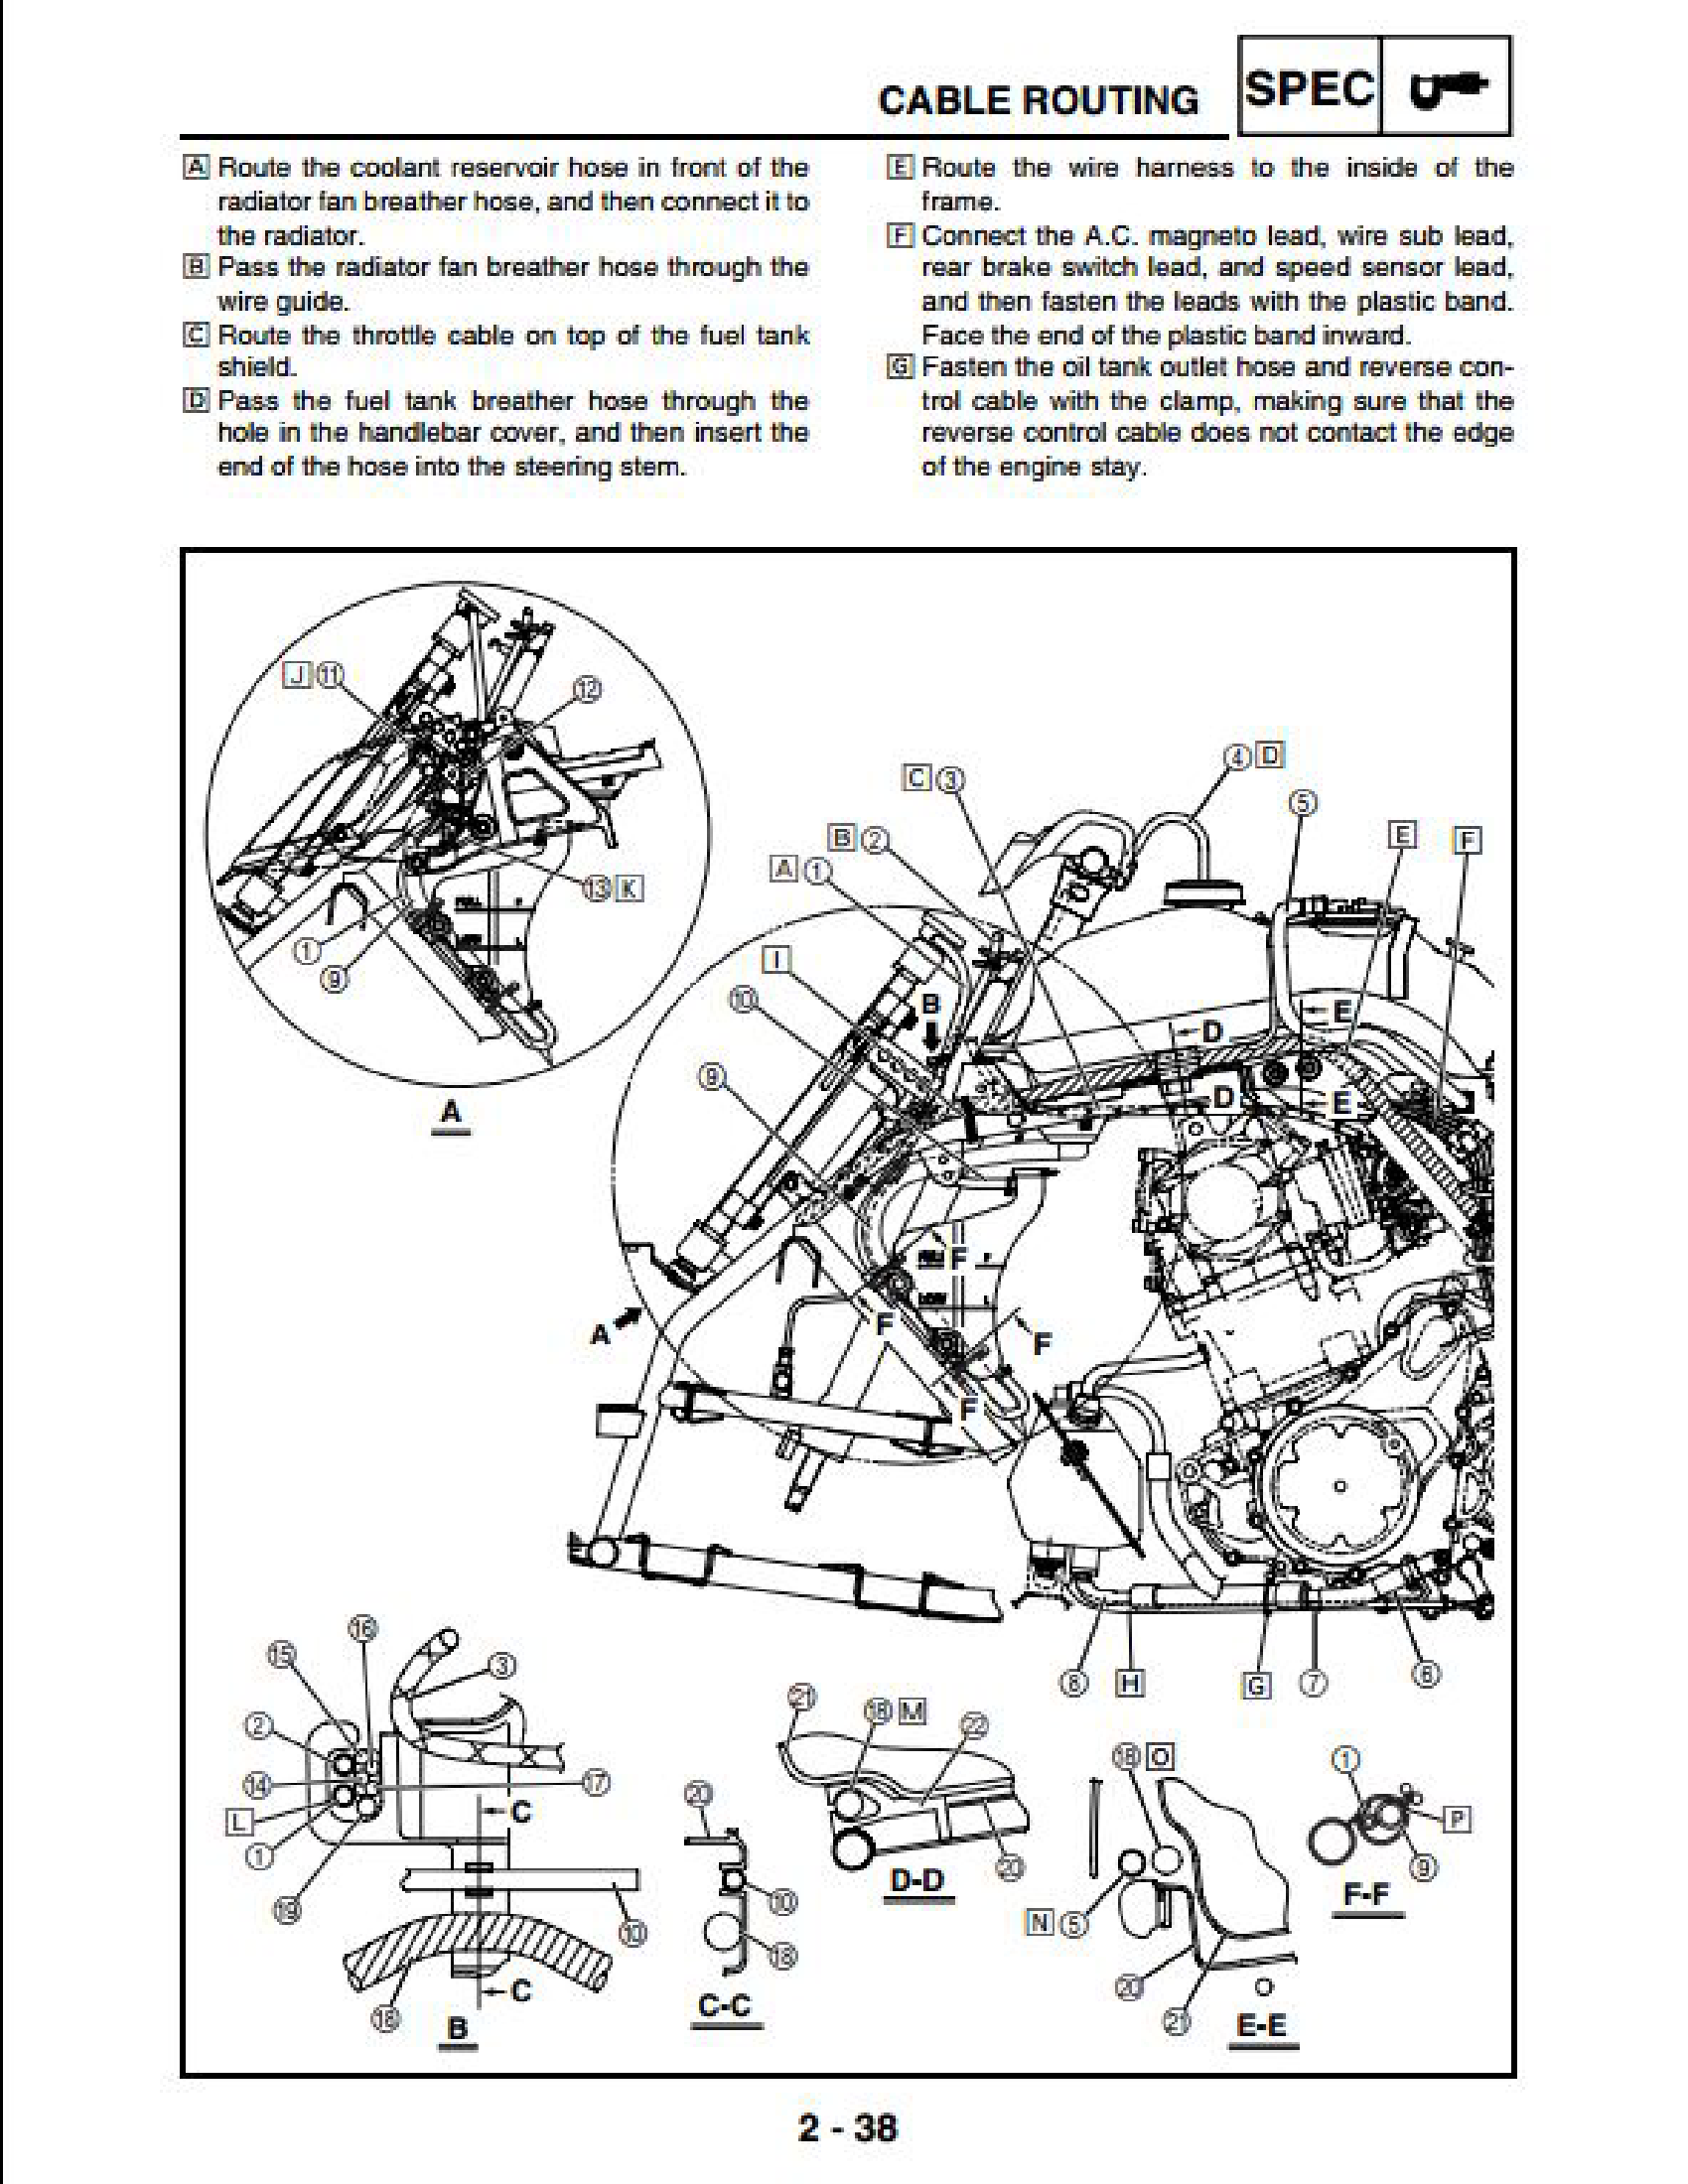 Yamaha YFM700RV ATV manual